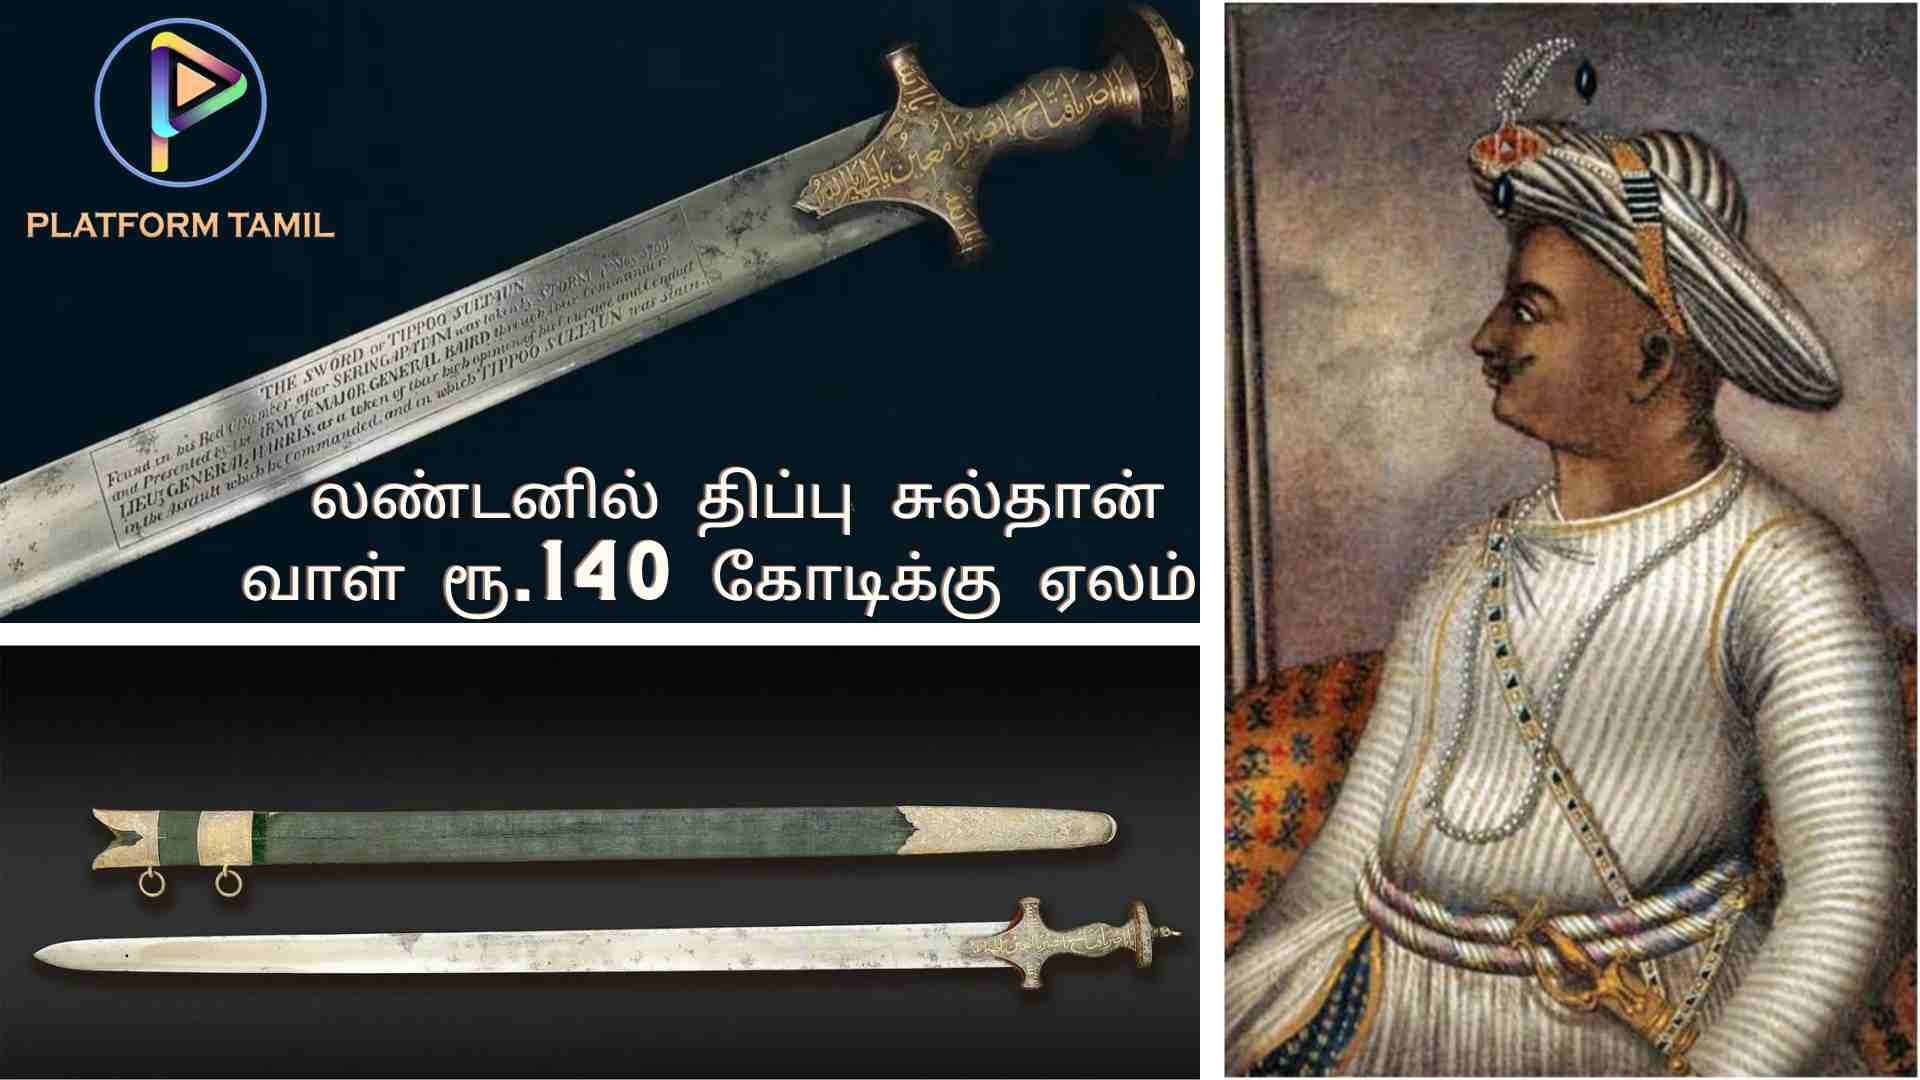 Tipu Sultans Iconic Sword - Platform Tamil